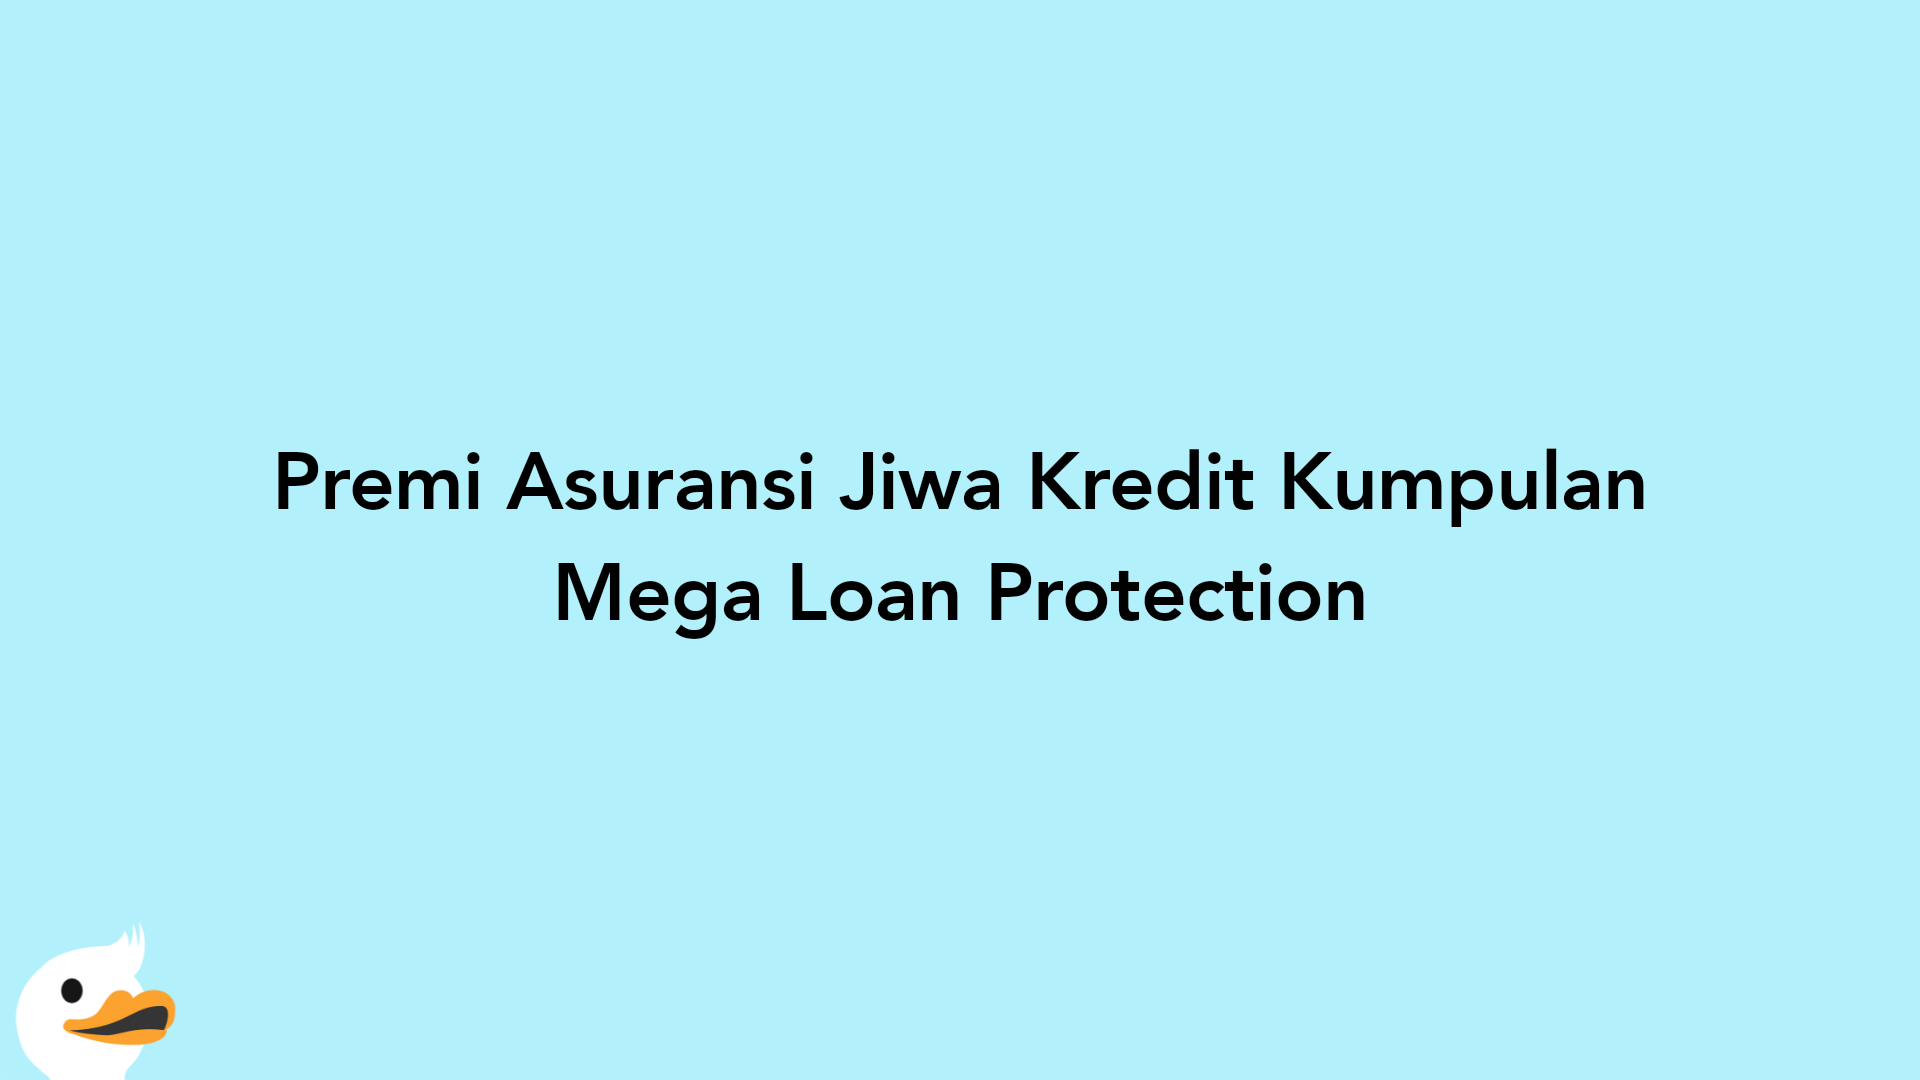 Premi Asuransi Jiwa Kredit Kumpulan Mega Loan Protection